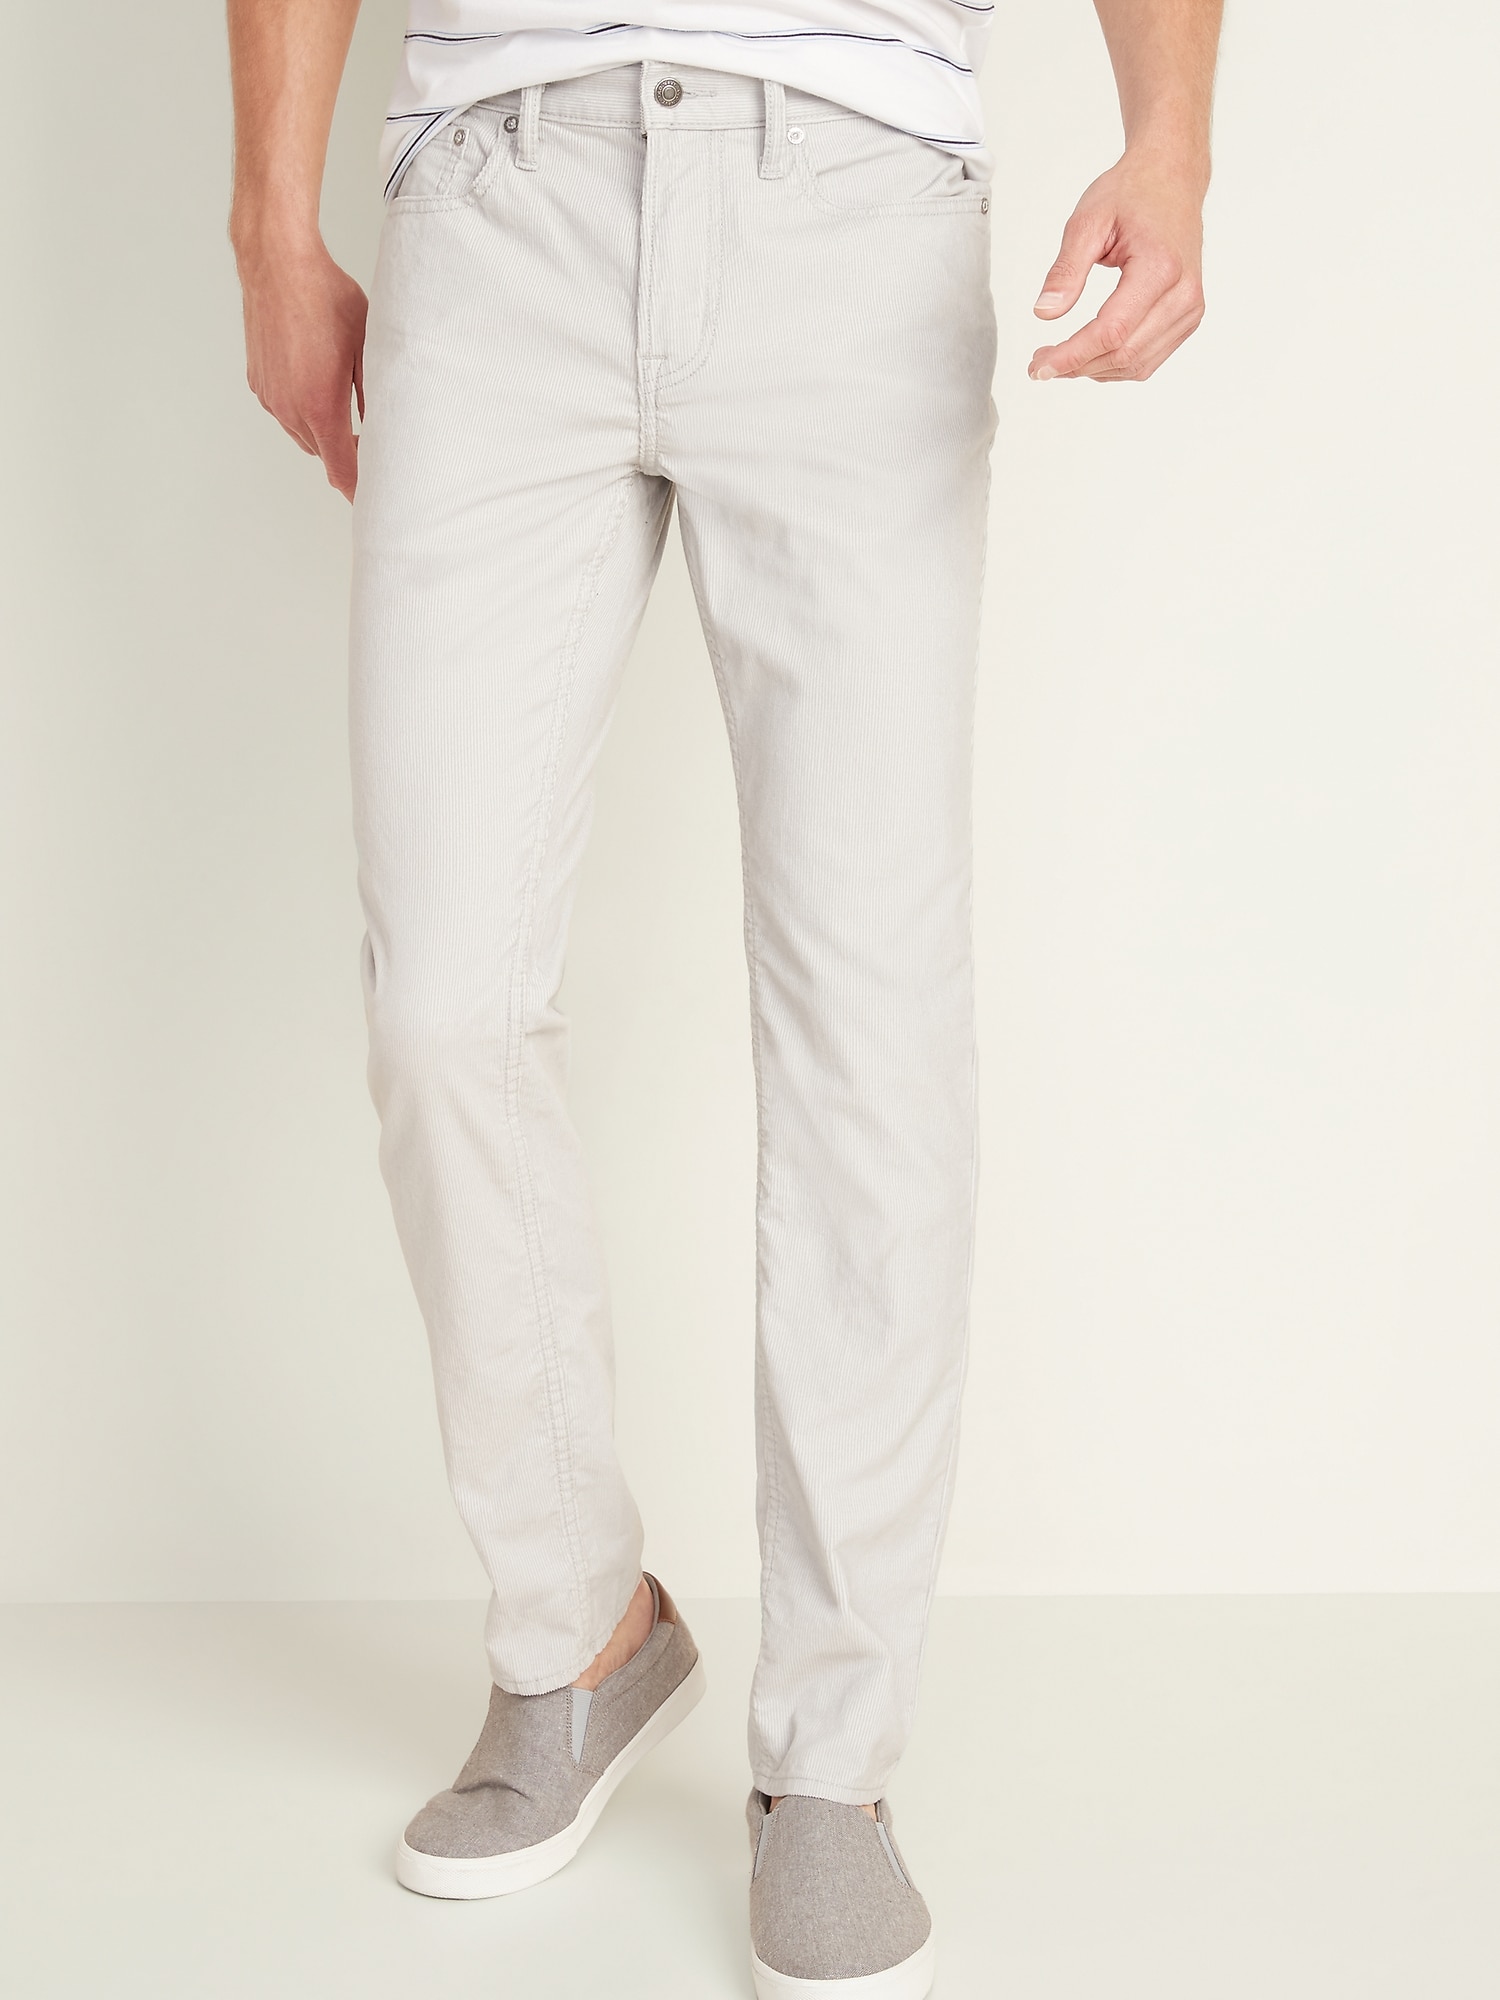 white skinny corduroy pants